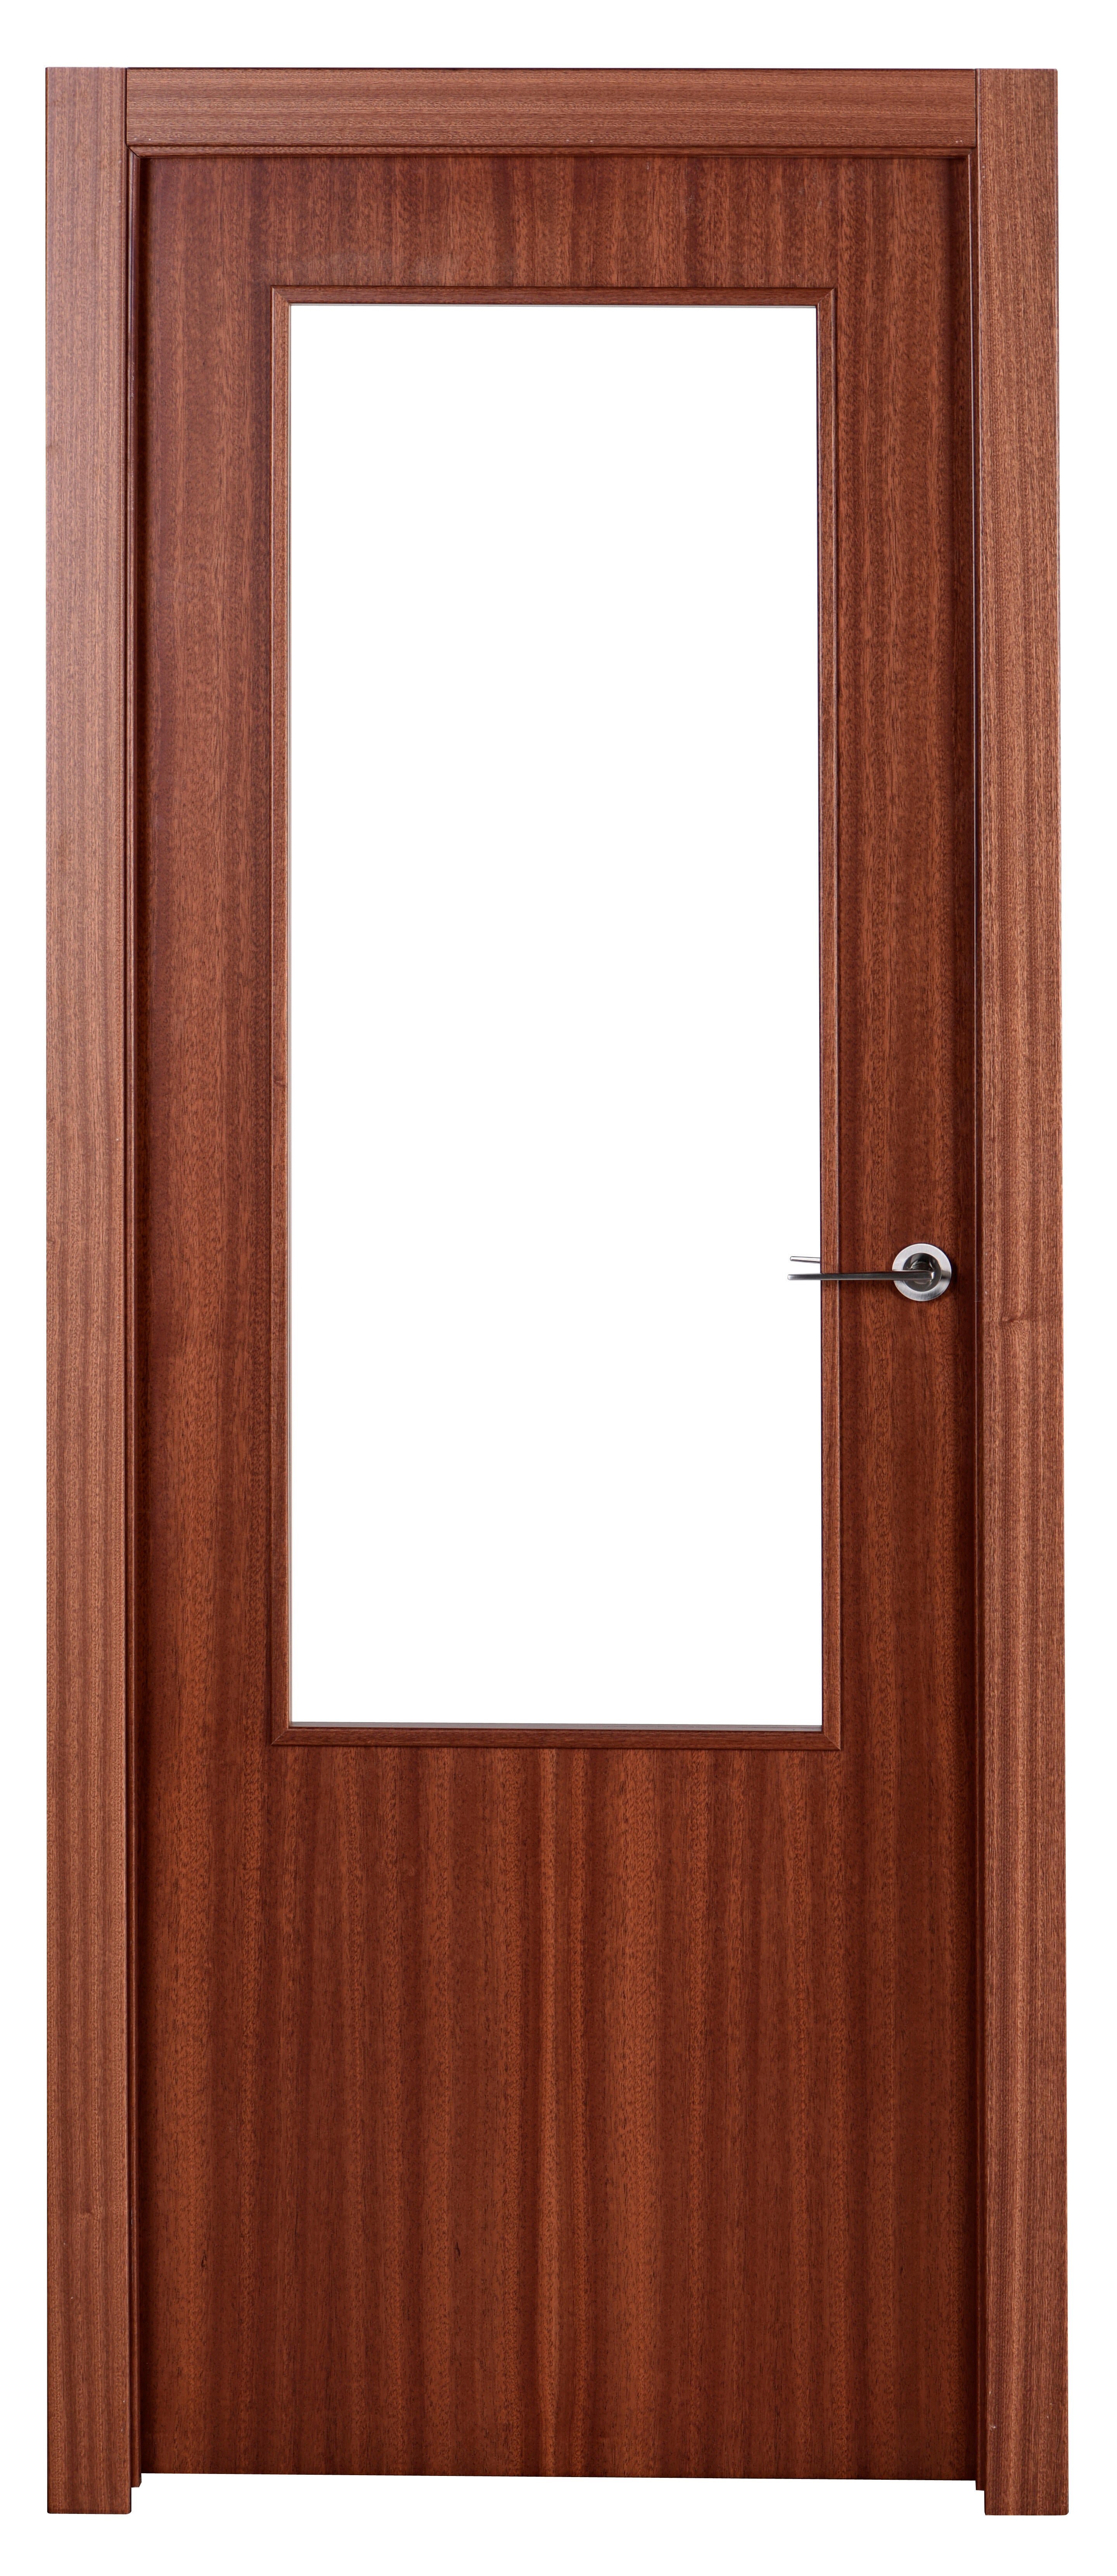 Puerta abatible lisboa sapelly line plus con cristal sapelly izquierda de 62.5x2